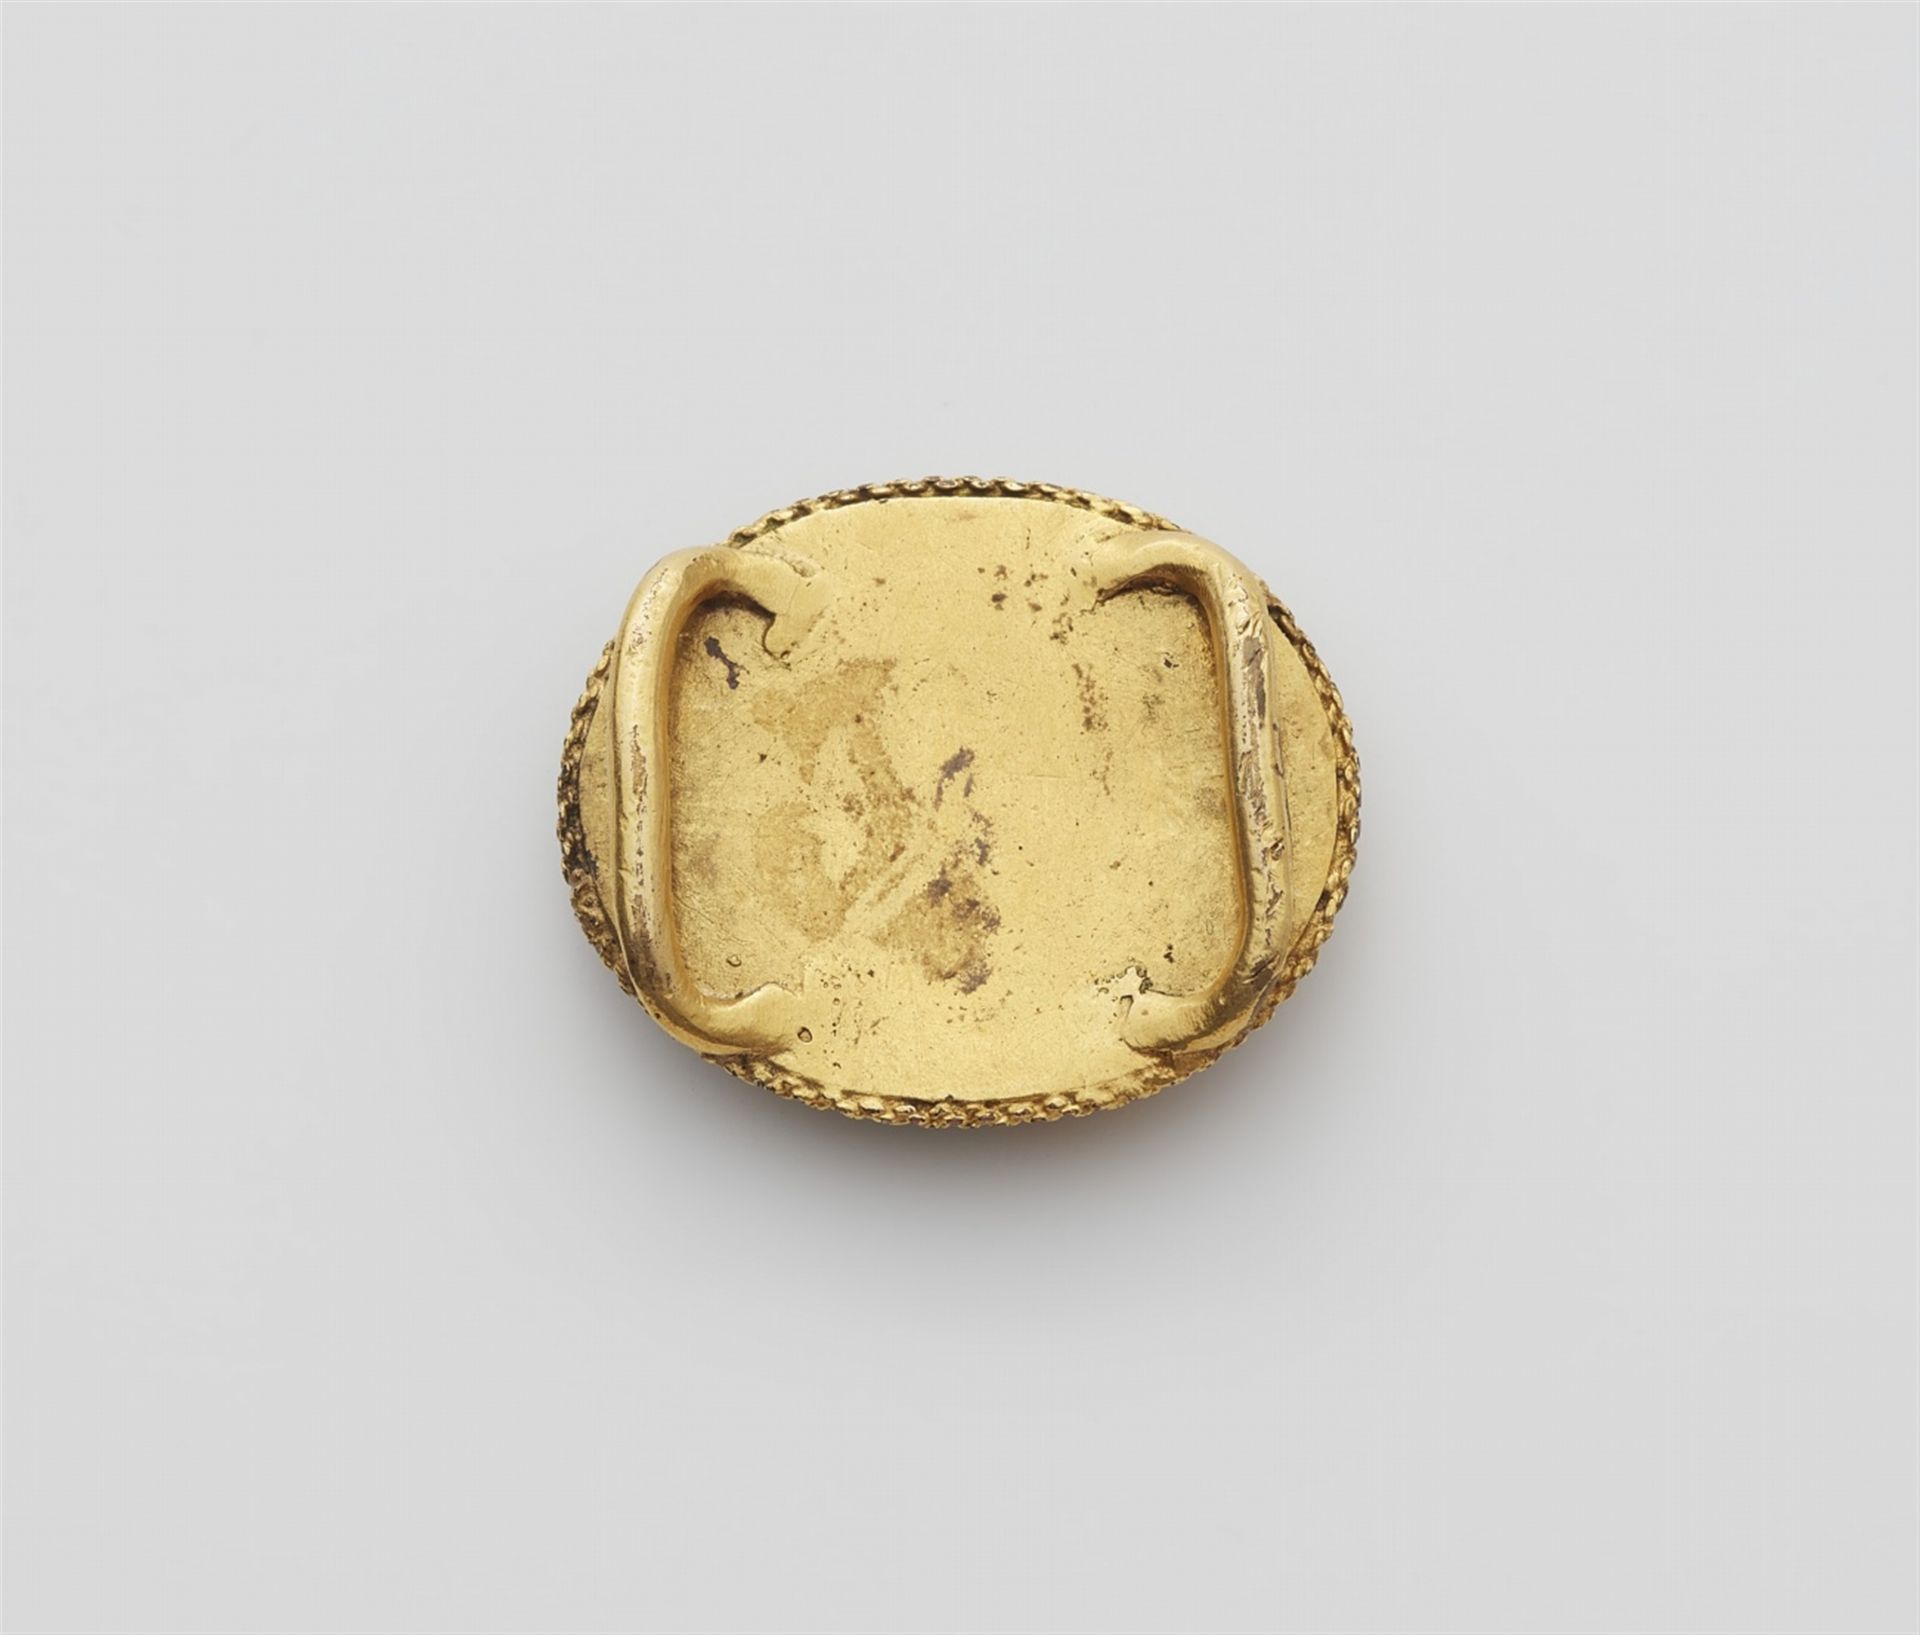 An enamel brooch depicting Samson and Delilah - Image 2 of 2